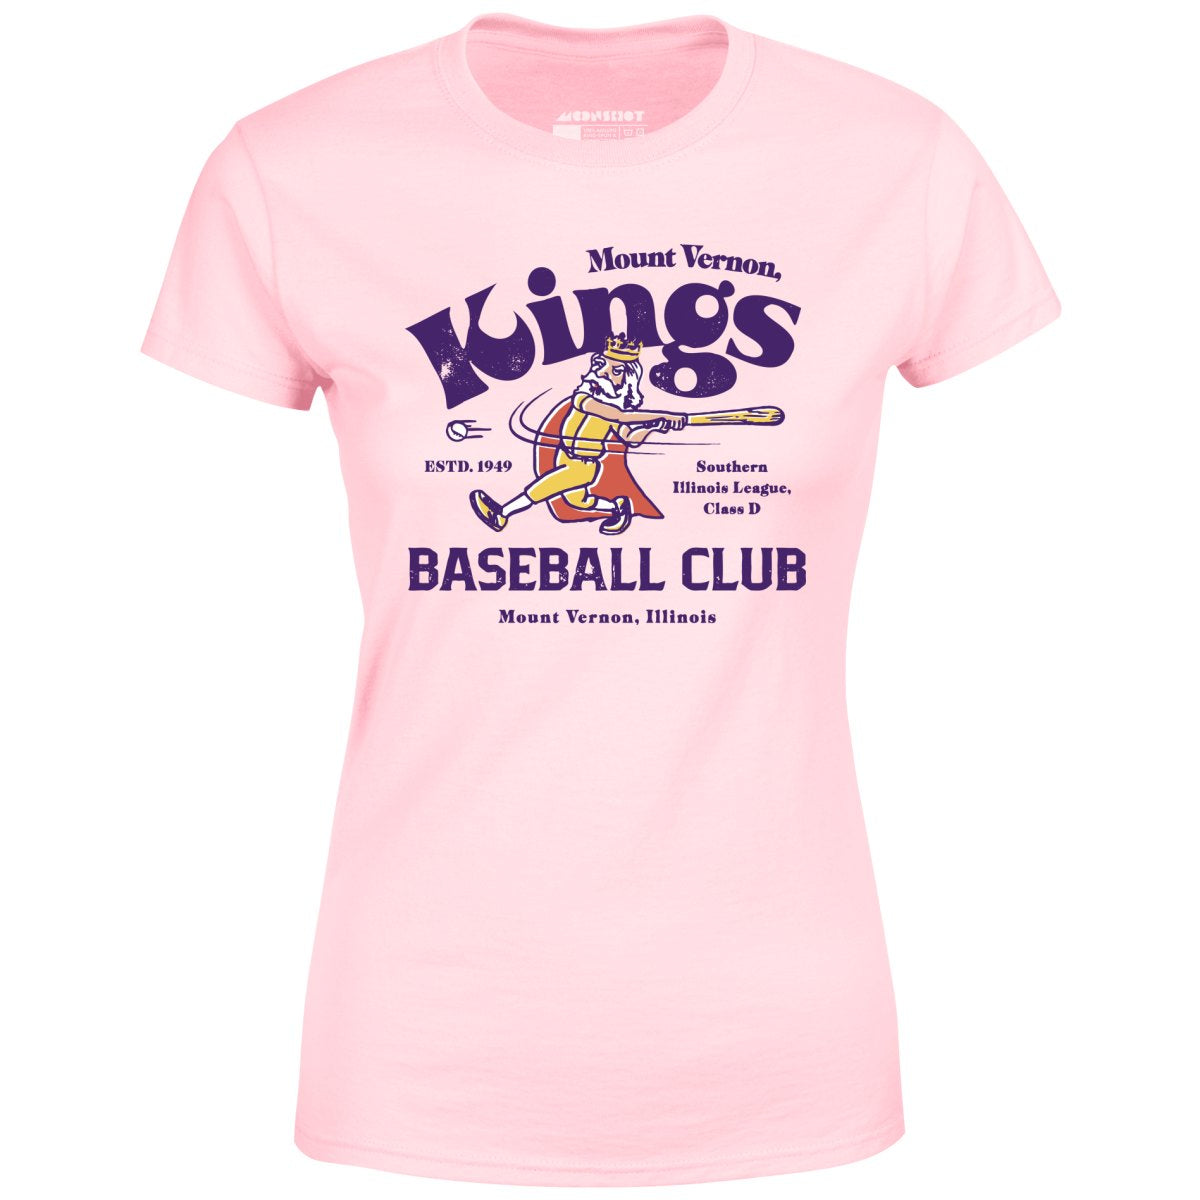 Mount Vernon Kings - Illinois - Vintage Defunct Baseball Teams - Women's T-Shirt